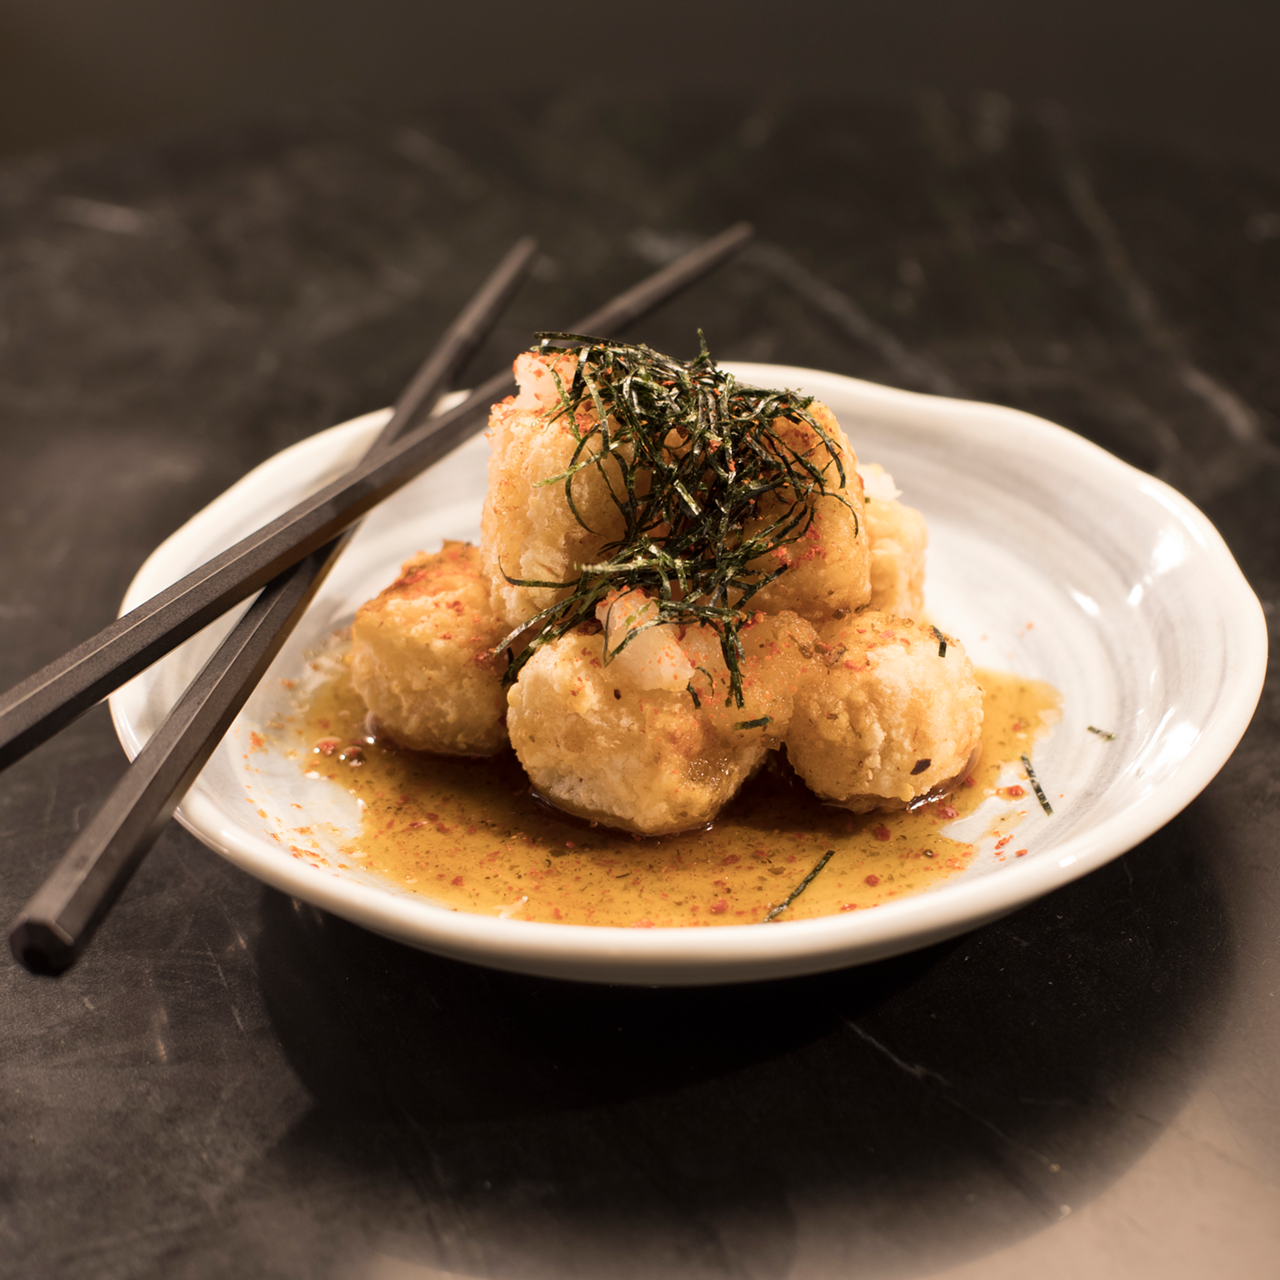 The tempura-fried tofu karaage offers memorable flavors and texture.